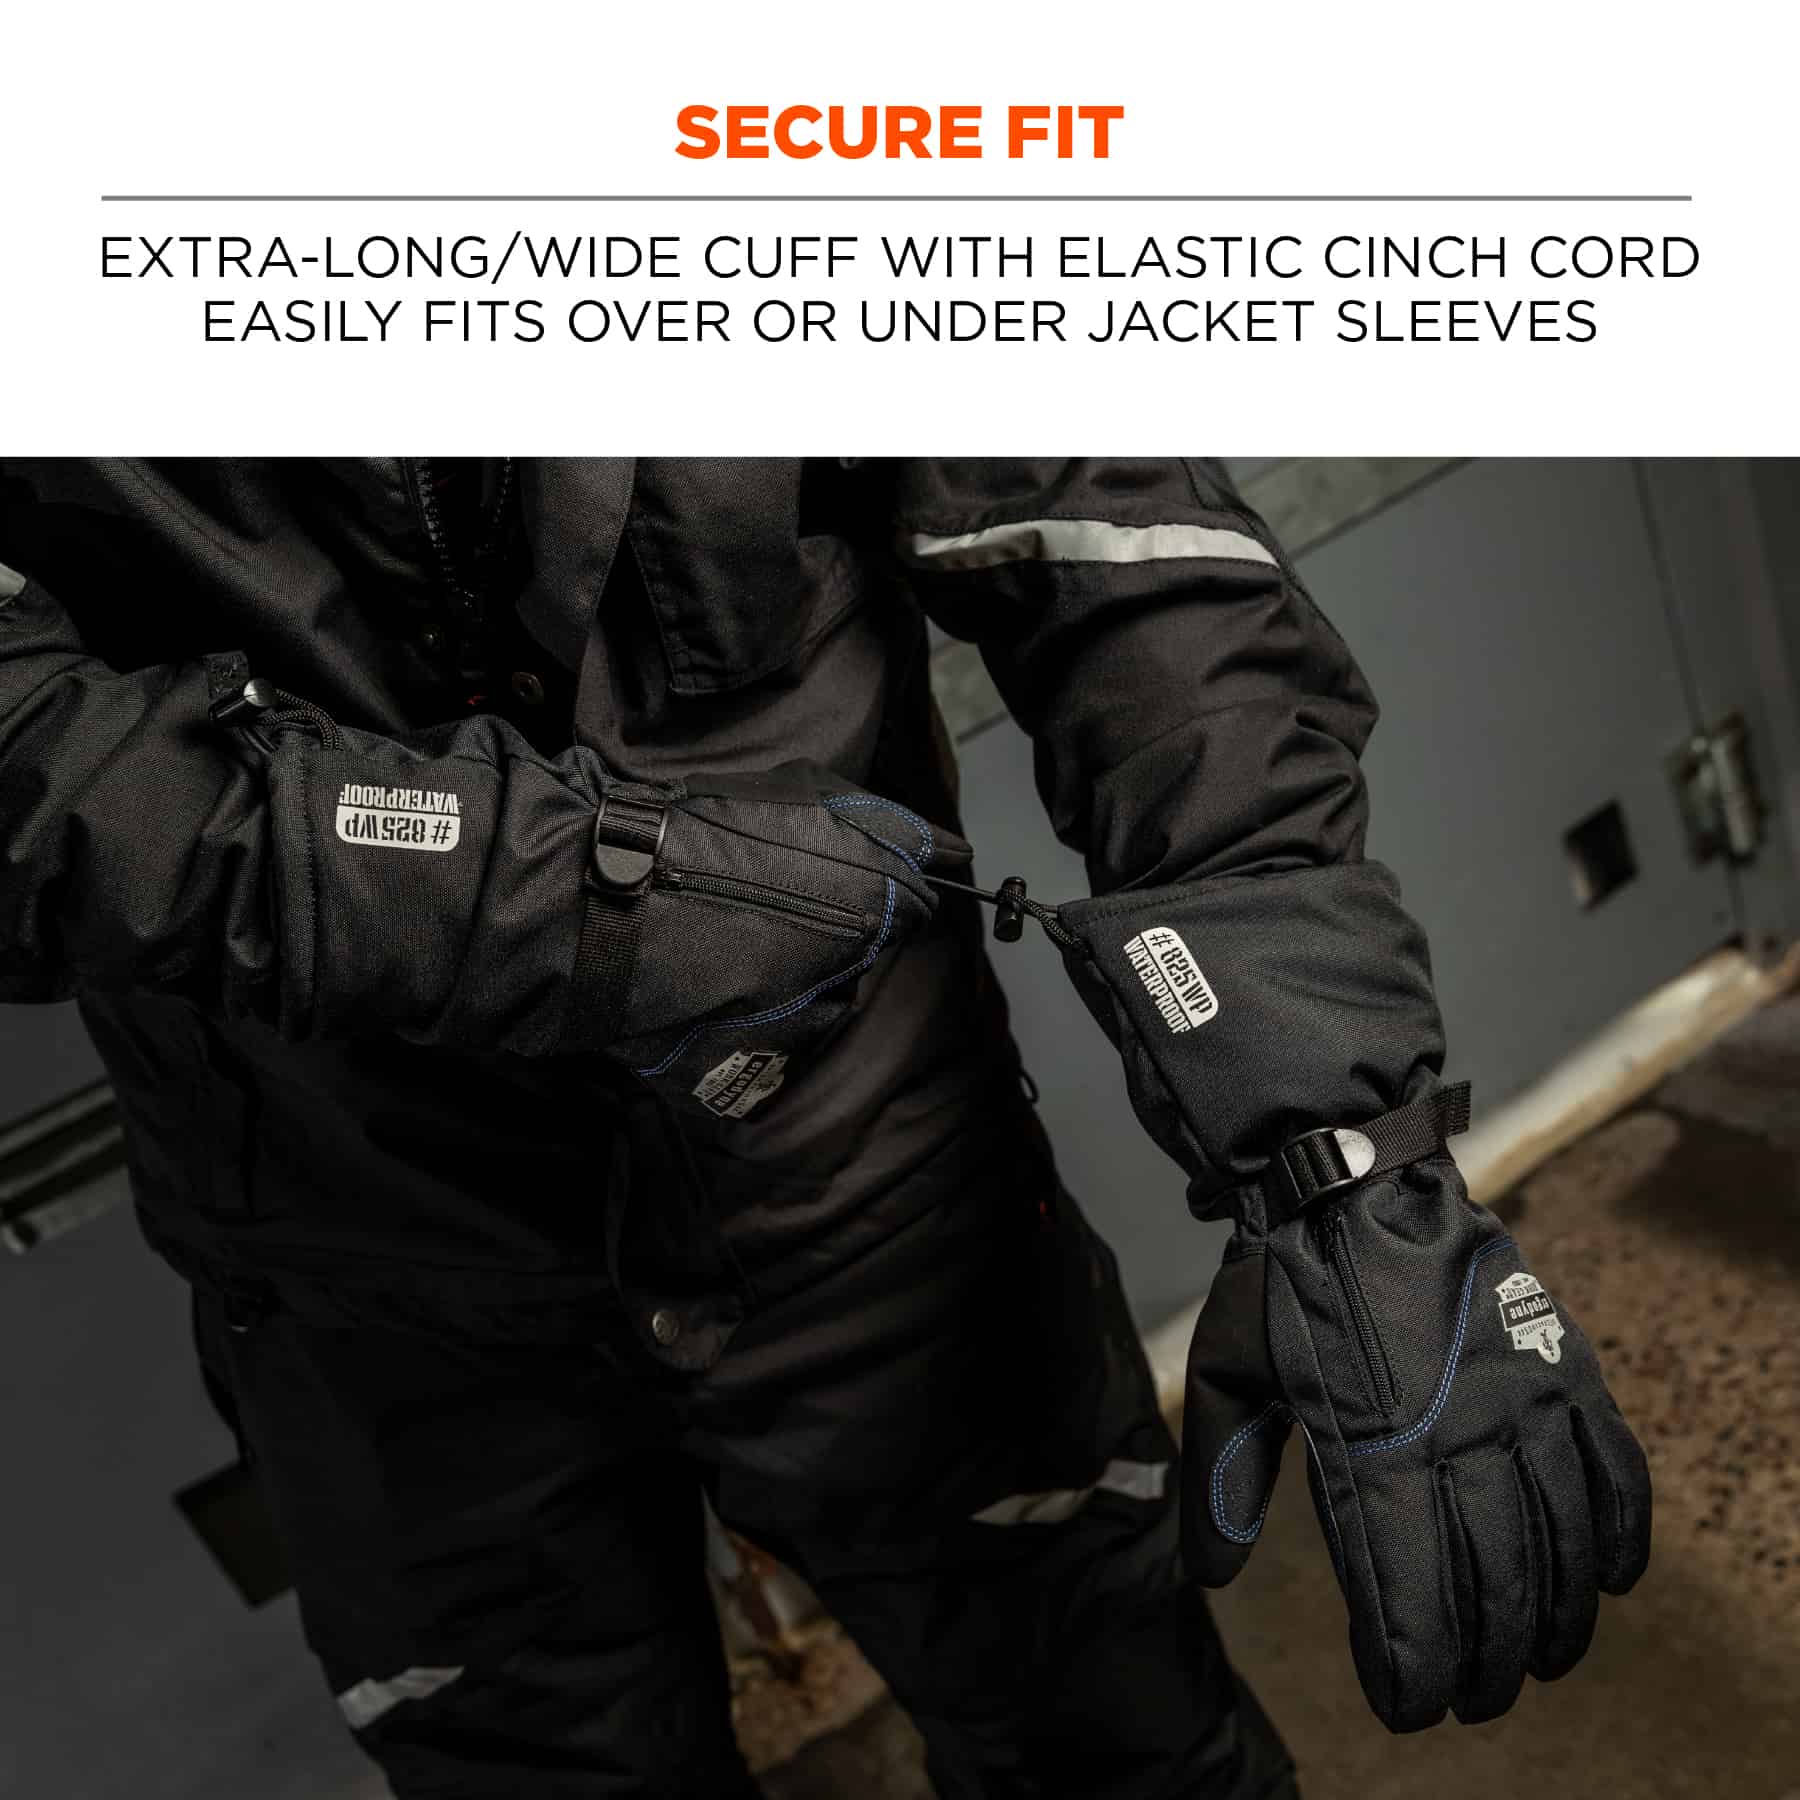 https://www.ergodyne.com/sites/default/files/product-images/17602-825wp-thermal-waterproof-winter-work-gloves-black-secure-fit.jpg